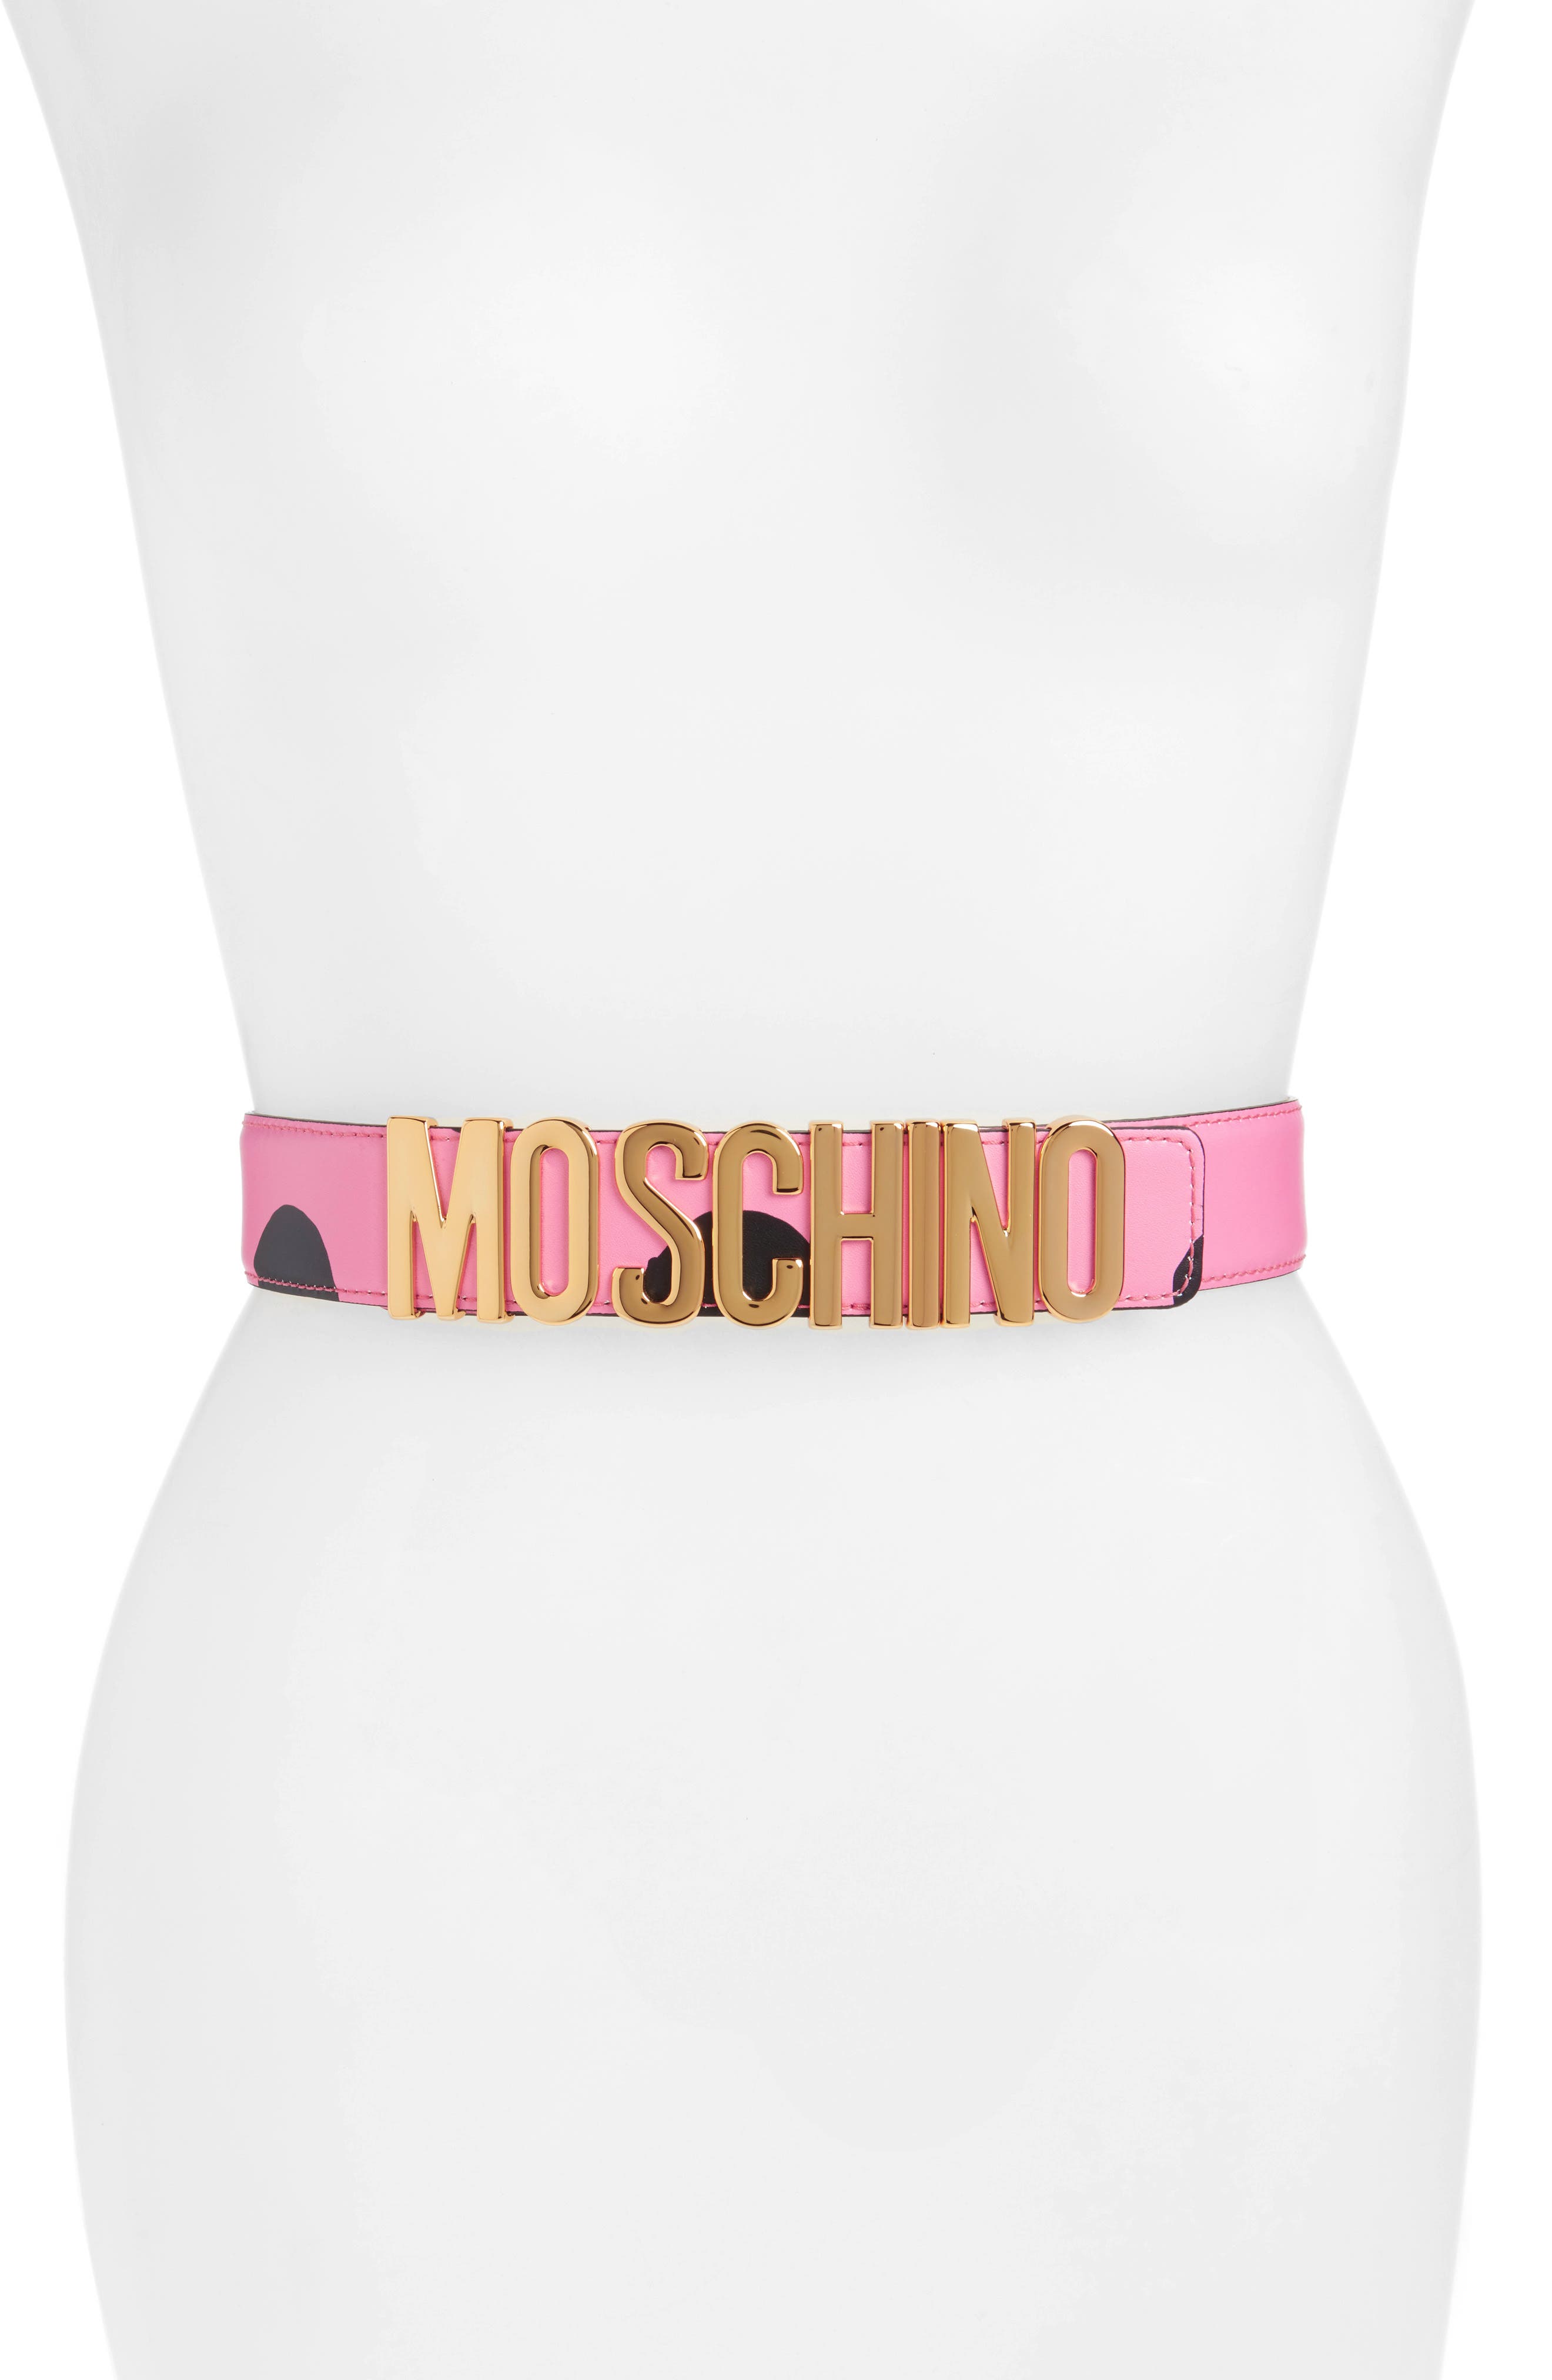 moschino belt womens sale